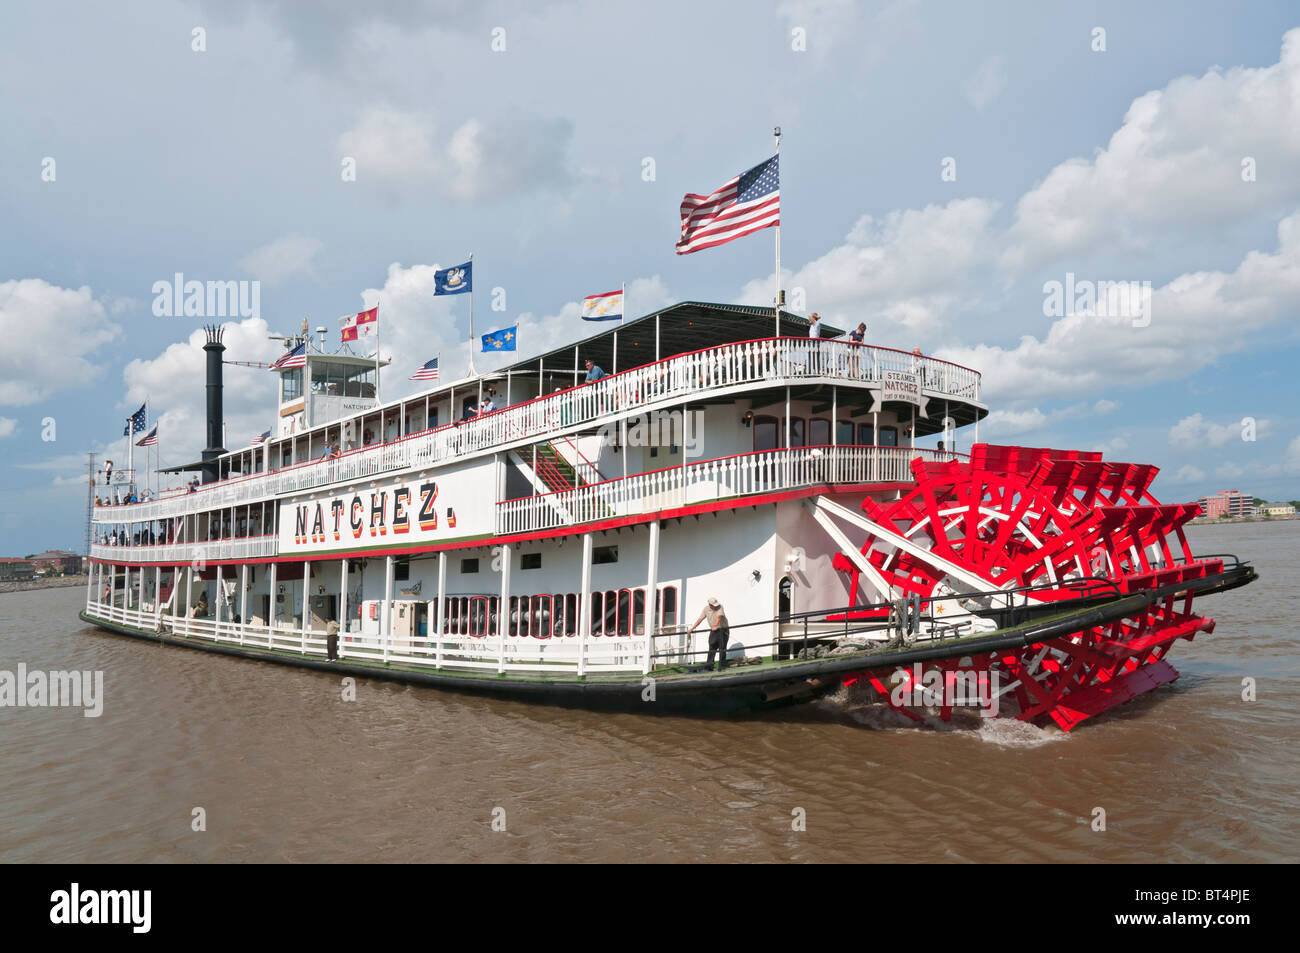 Louisiana, New Orleans, Dampfschiff Natchez, Mississippi River Tour Boot,  Dampf betriebene Raddampfer startete 1975 Stockfotografie - Alamy